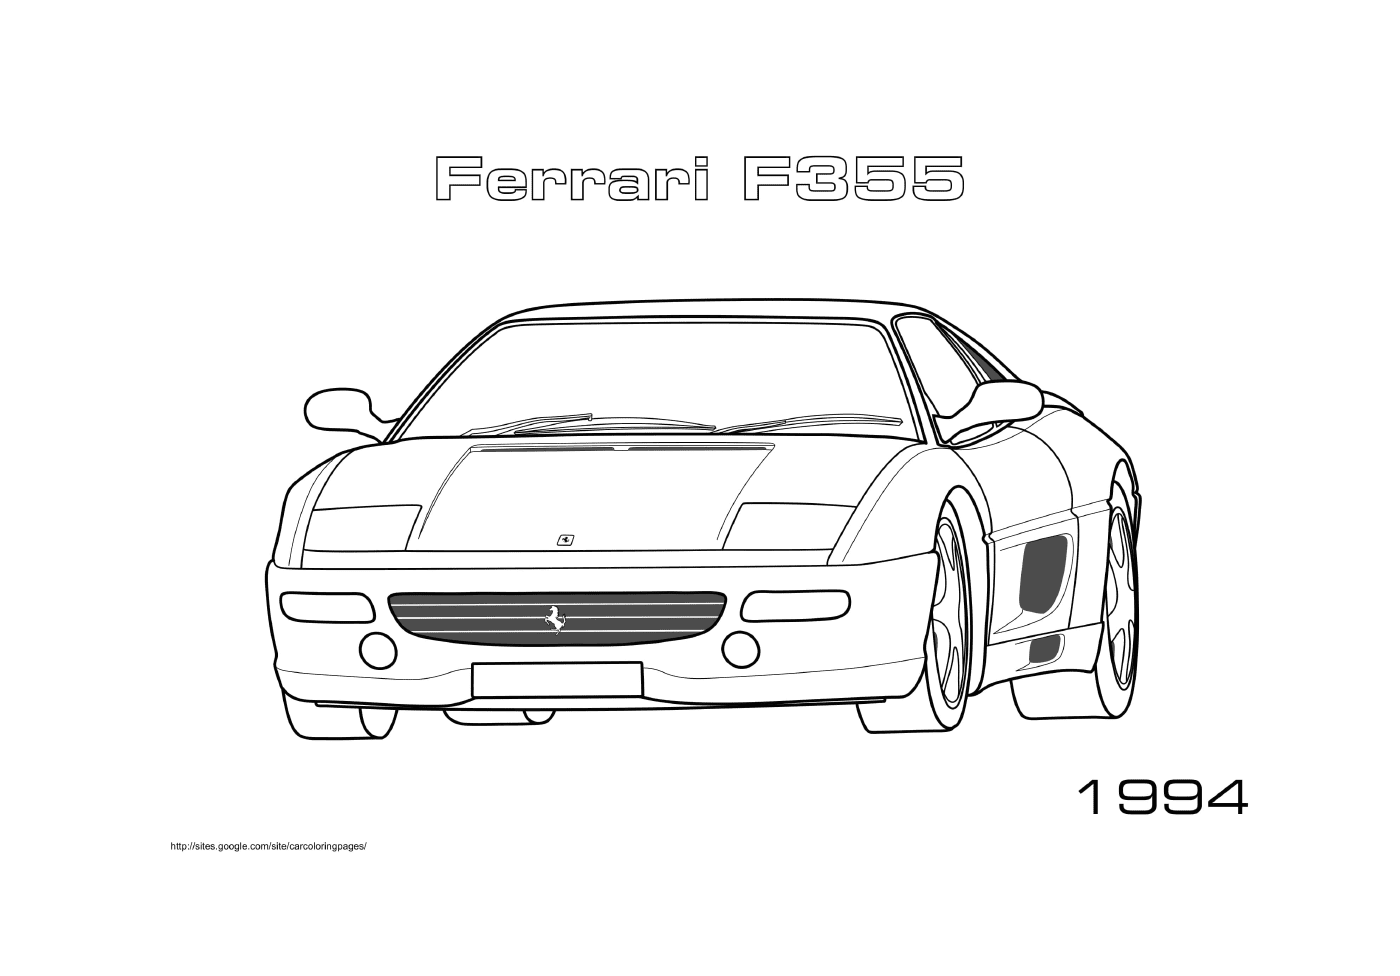  Ferrari F355 von 1994 